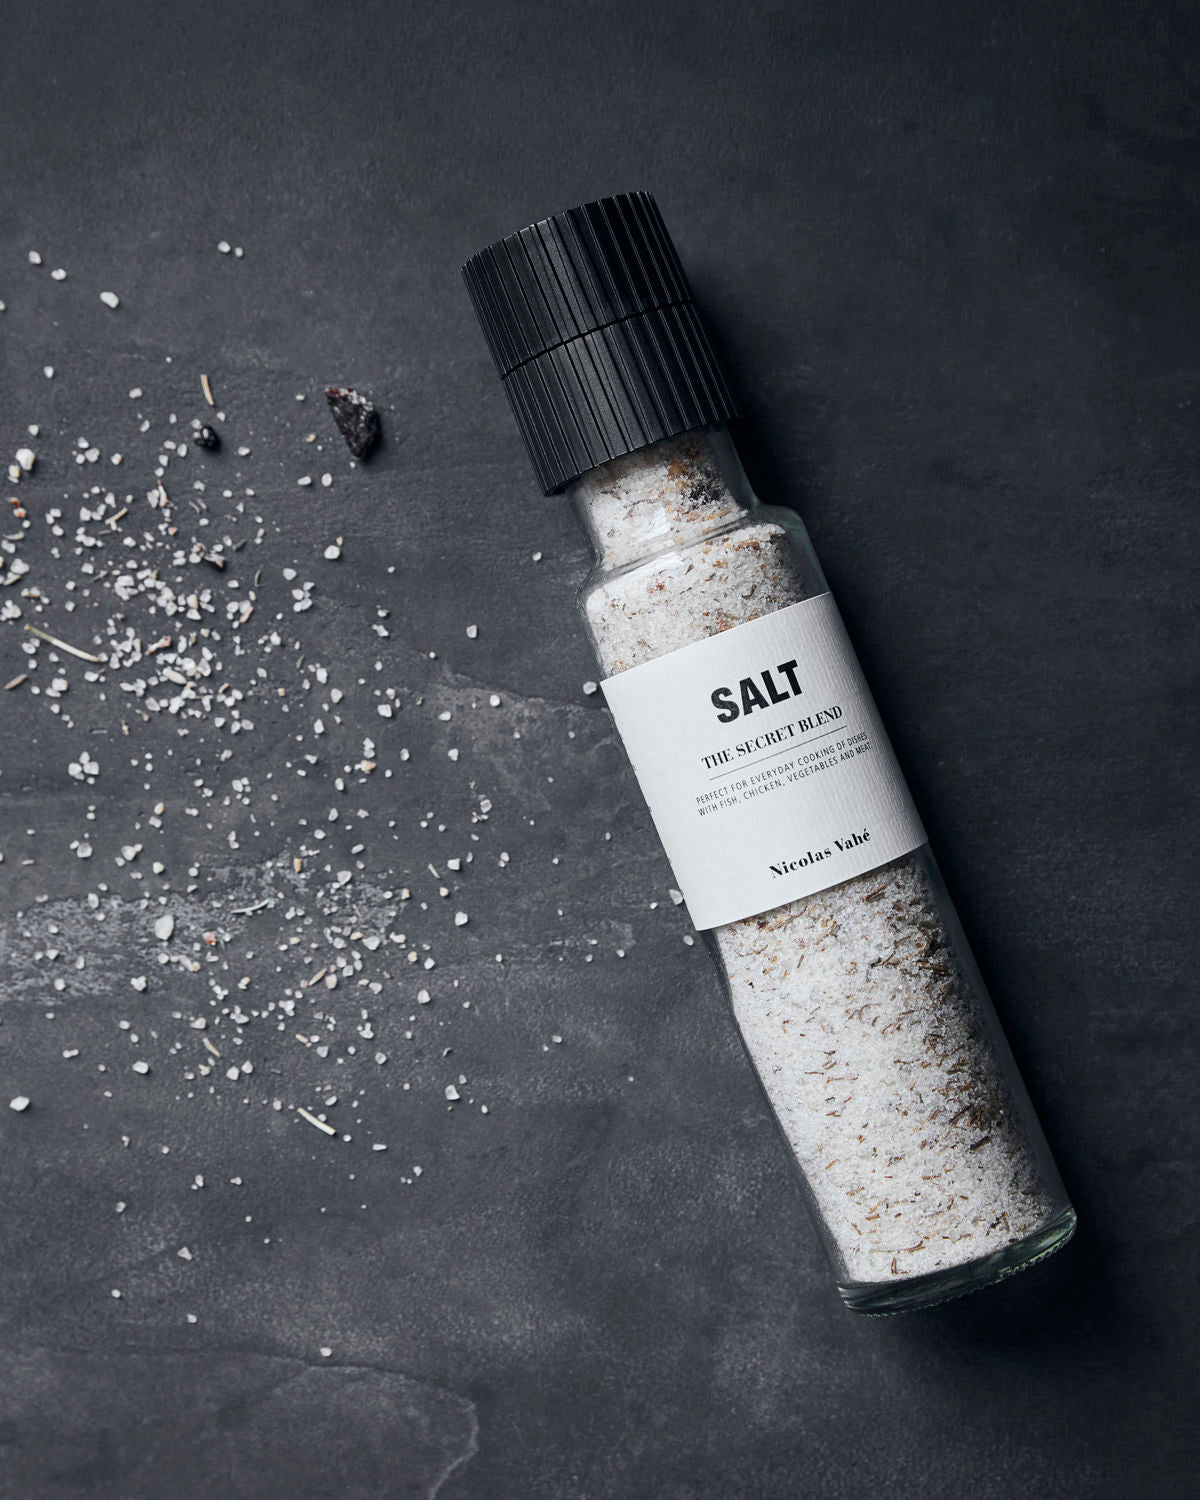 Salt, The Secret Blend Café Society